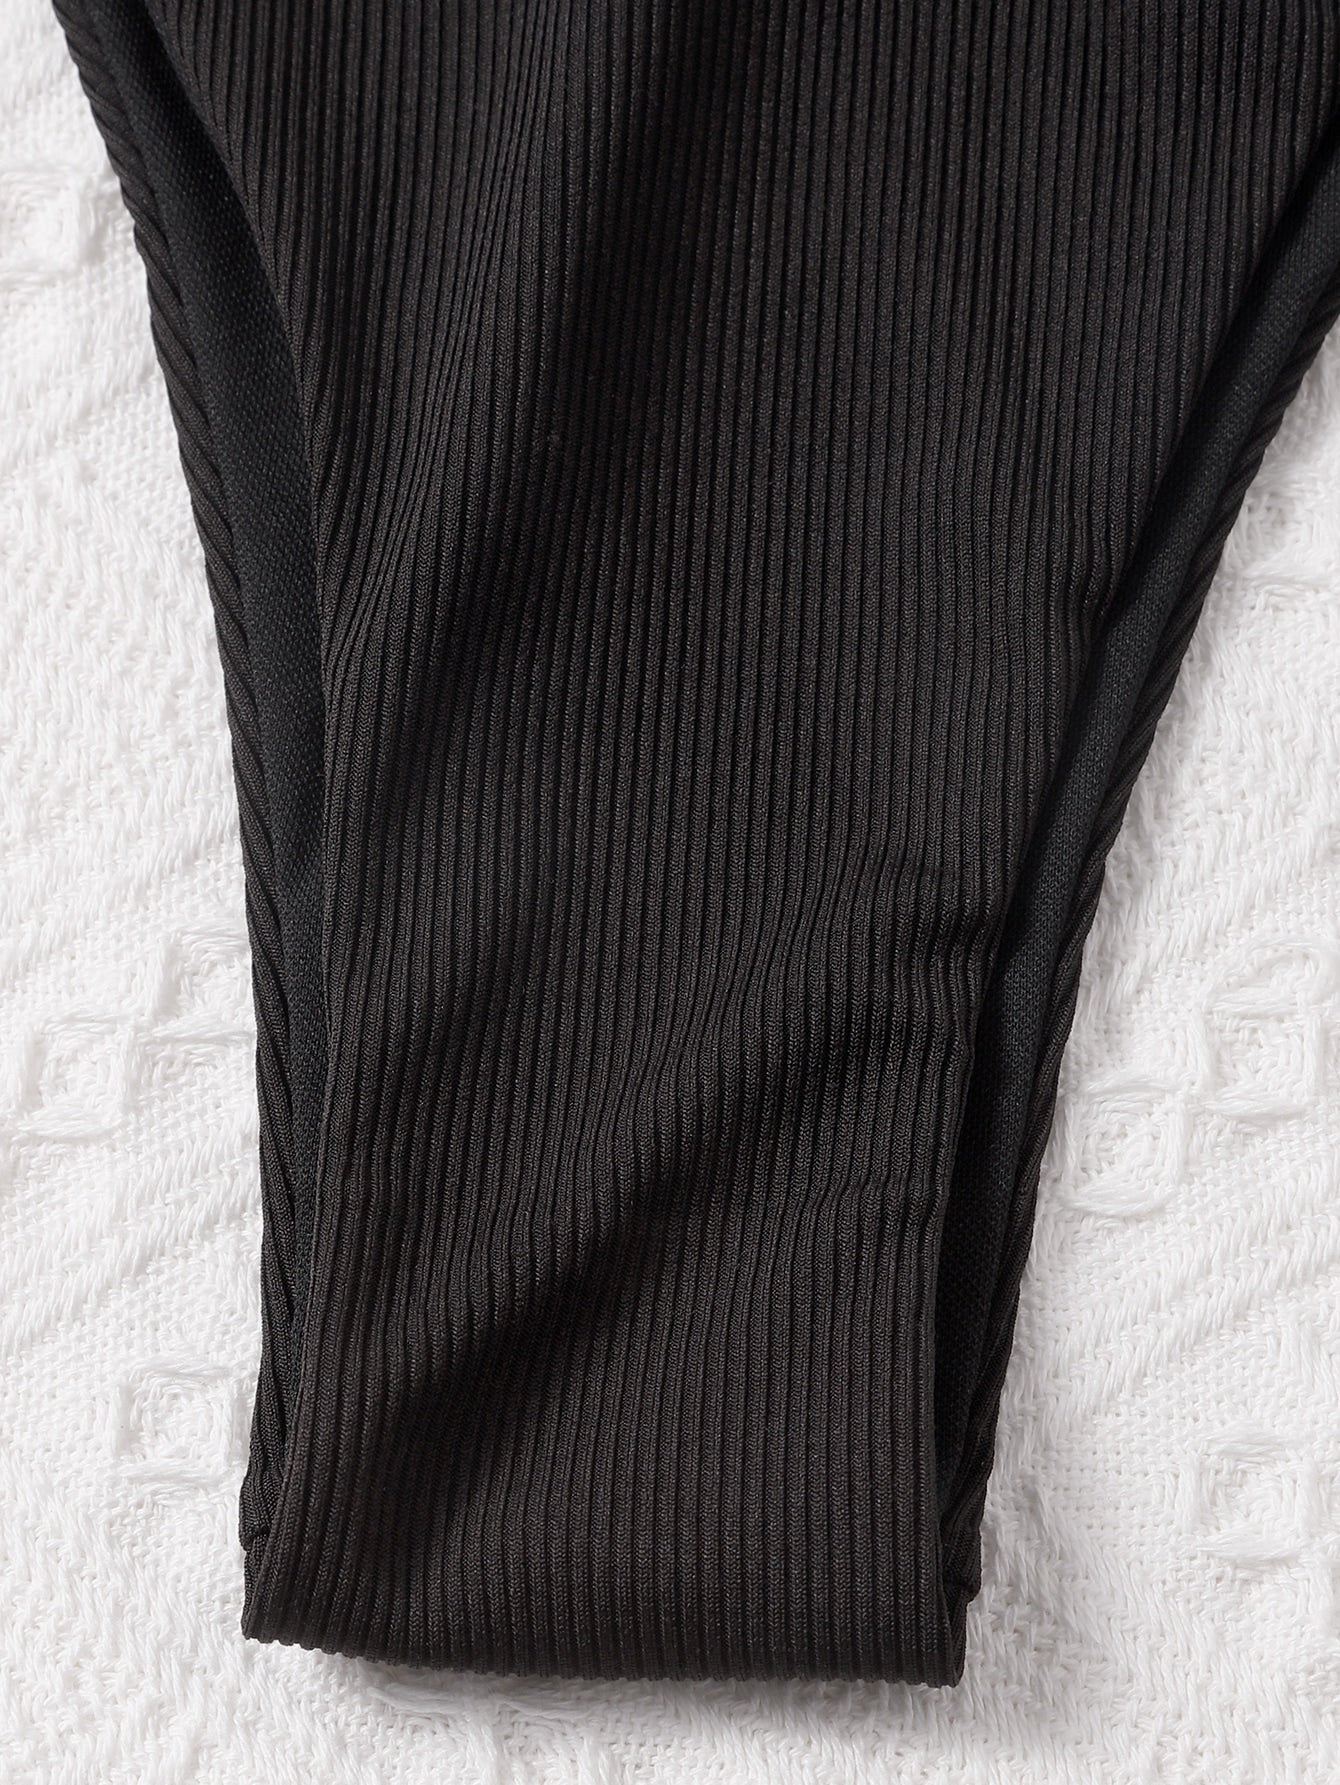 Adjustable Strap Cami Top & Tie Side Thong Bottom 2 Piece Bikini Set